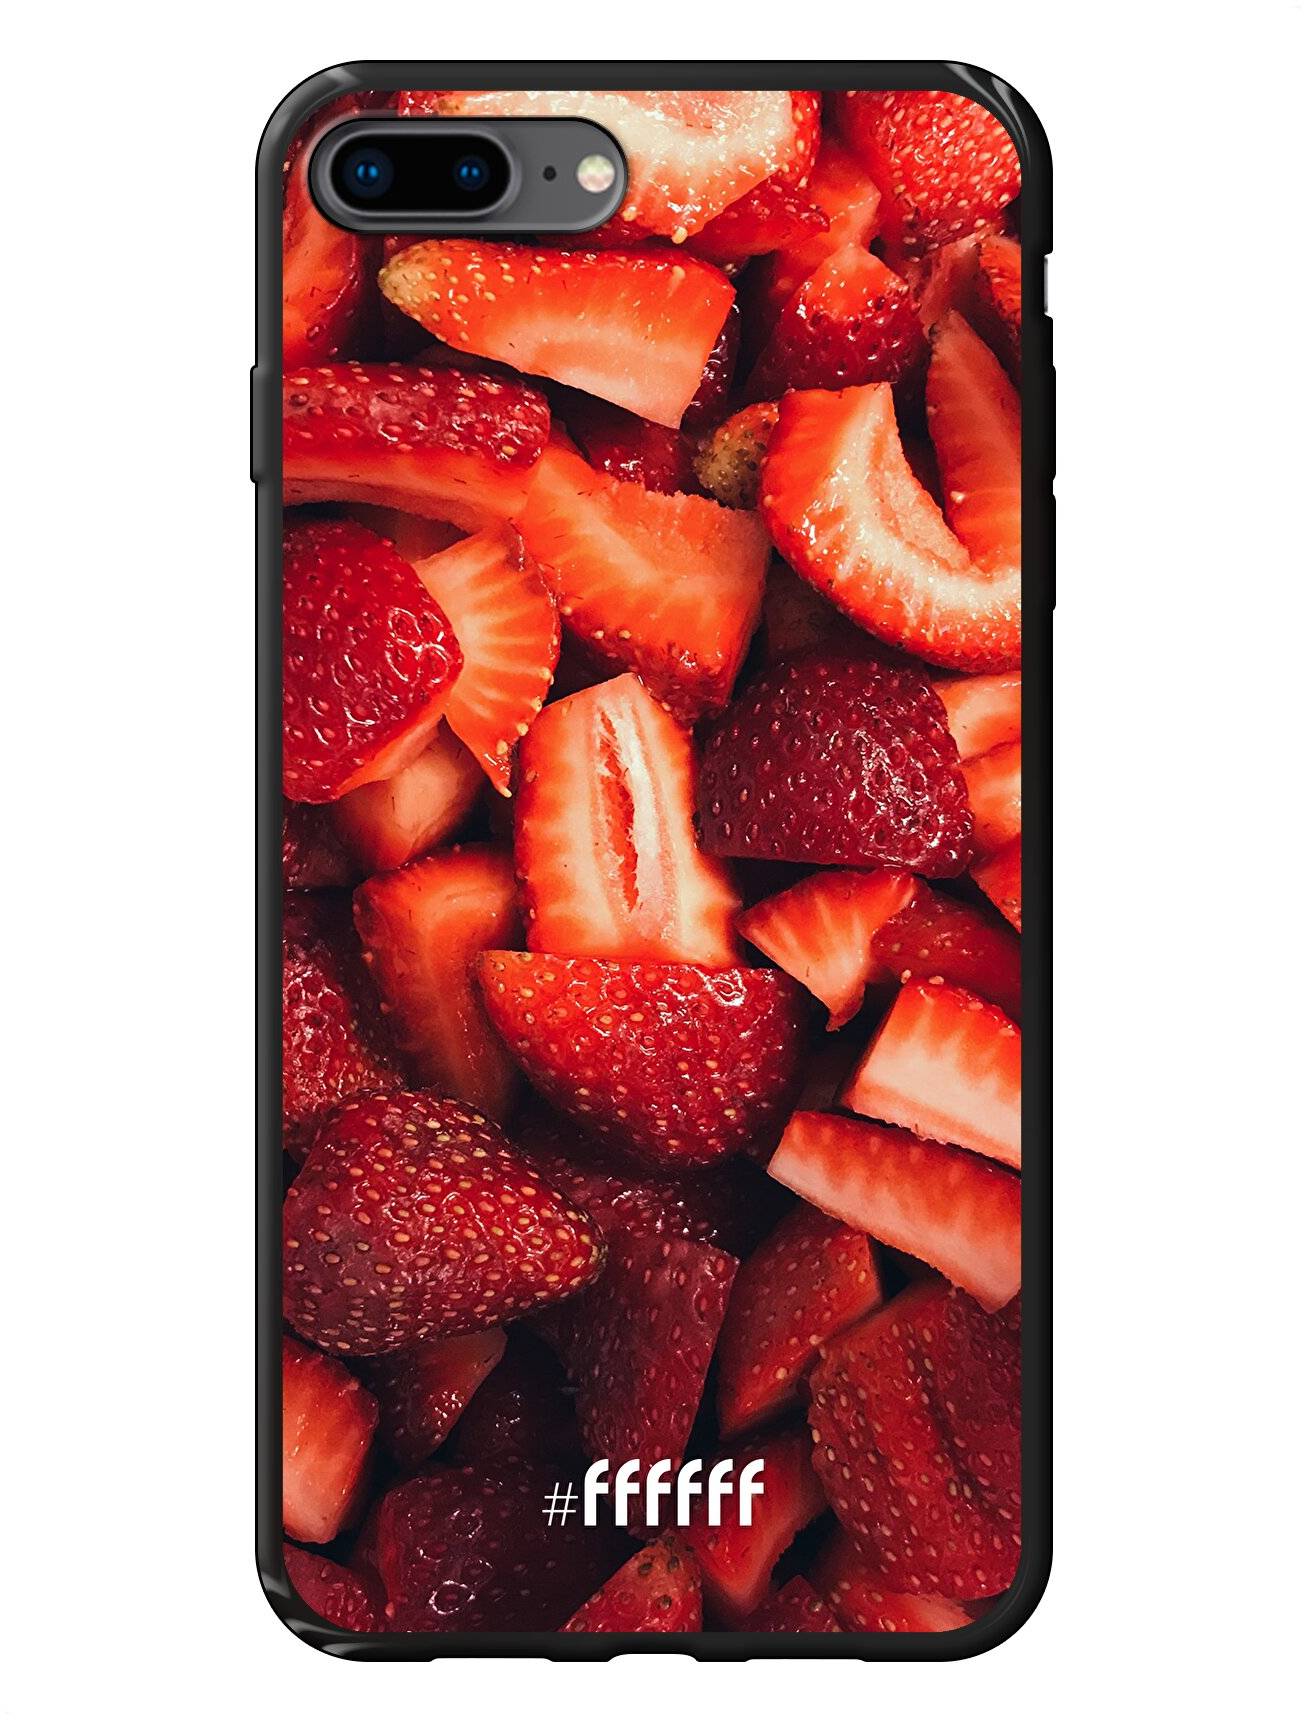 Strawberry Fields iPhone 8 Plus